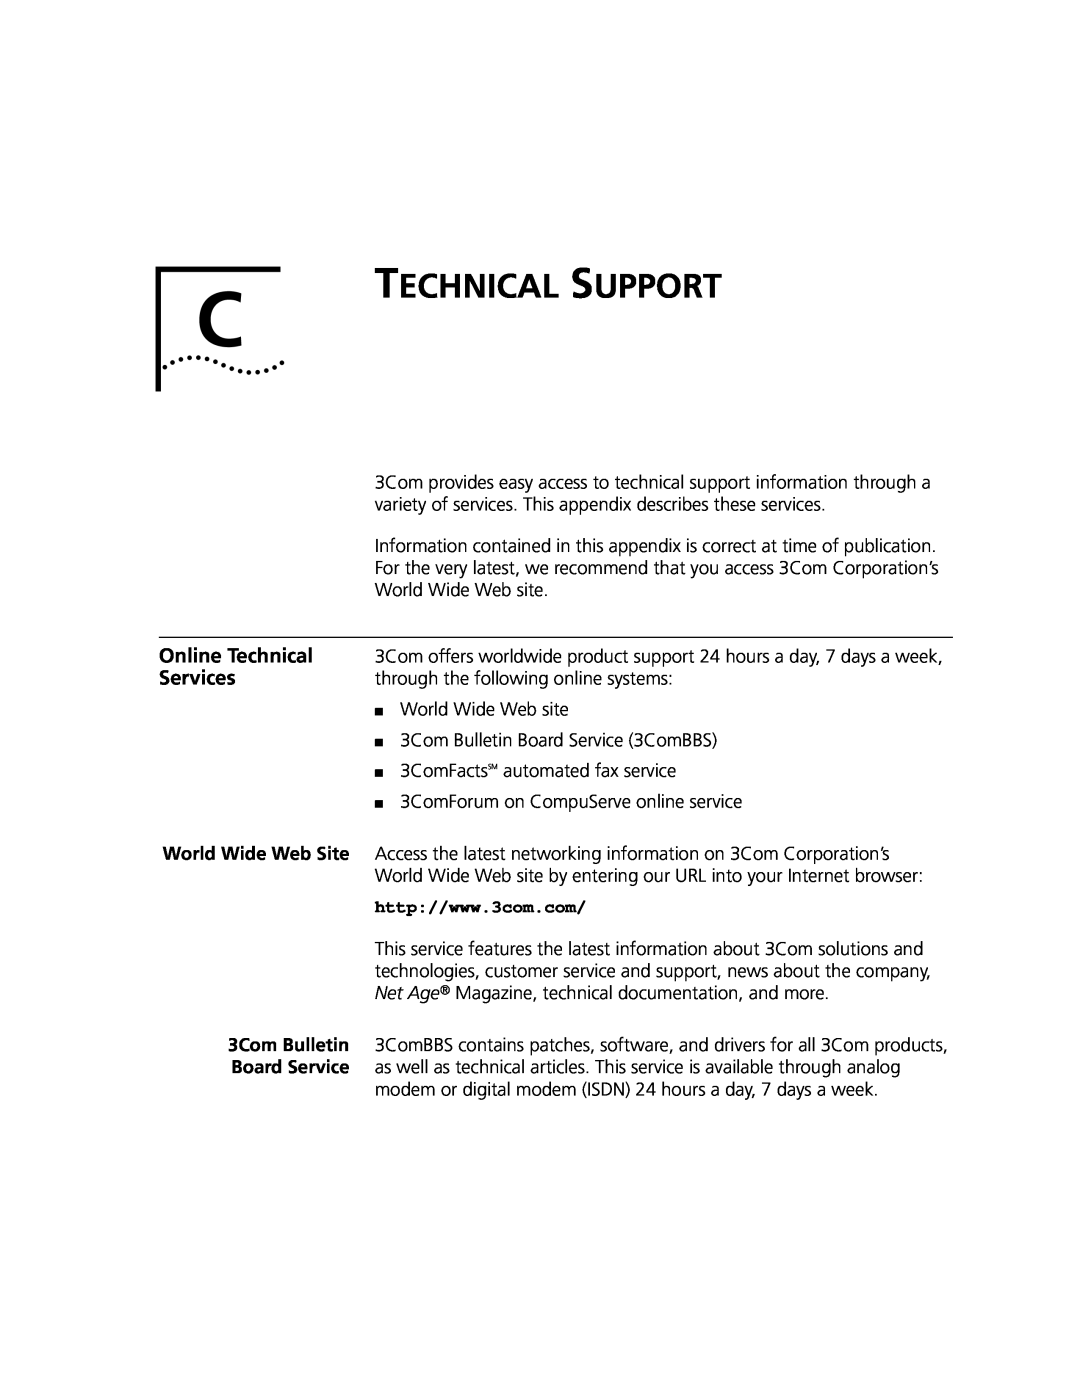 3Com Hub 1000 SX manual Technical Support, Online Technical, Services, 3Com Bulletin, Board Service 